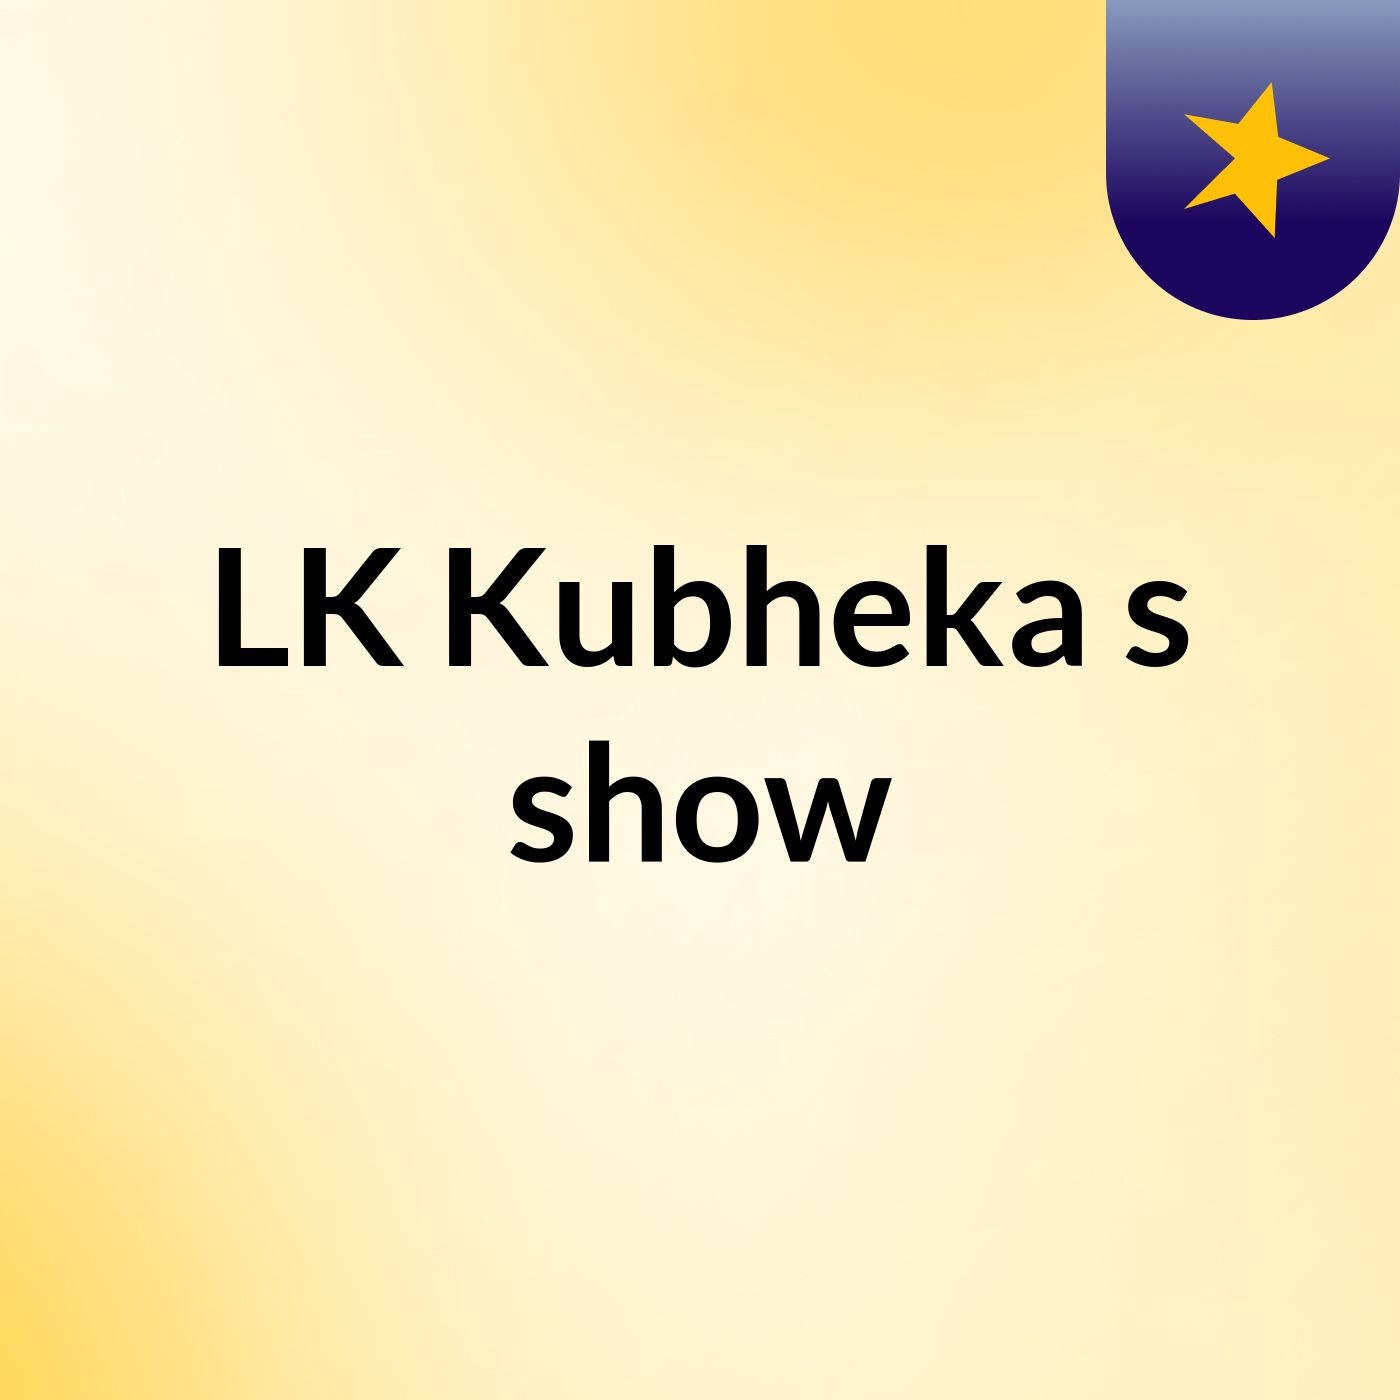 LK Kubheka's show